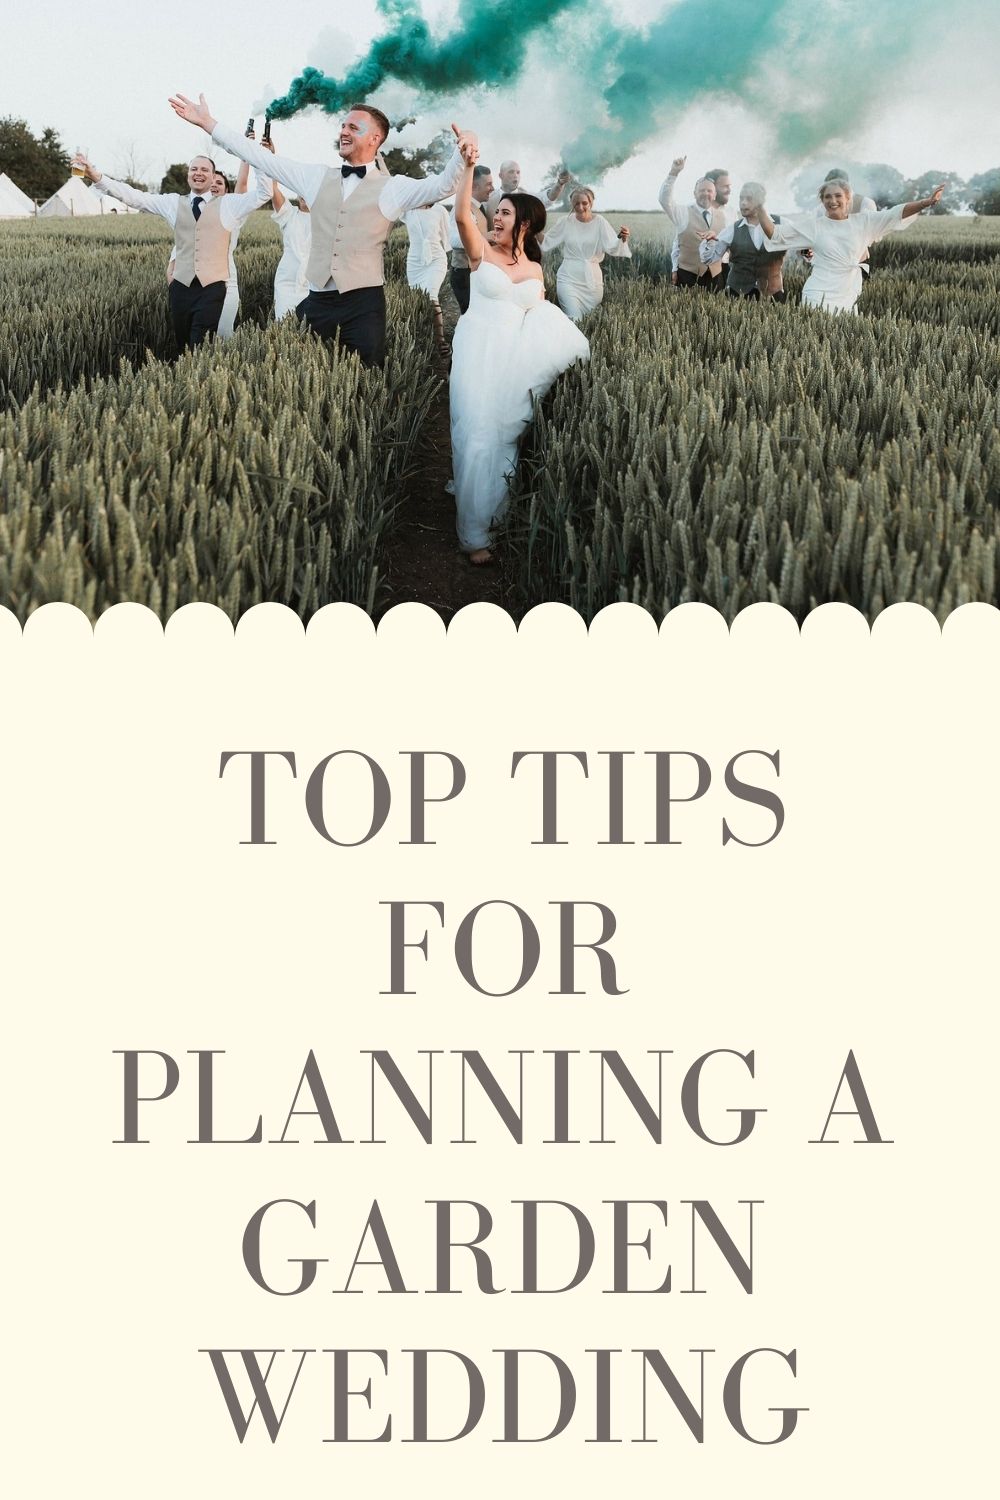 Top tips for planning a garden wedding